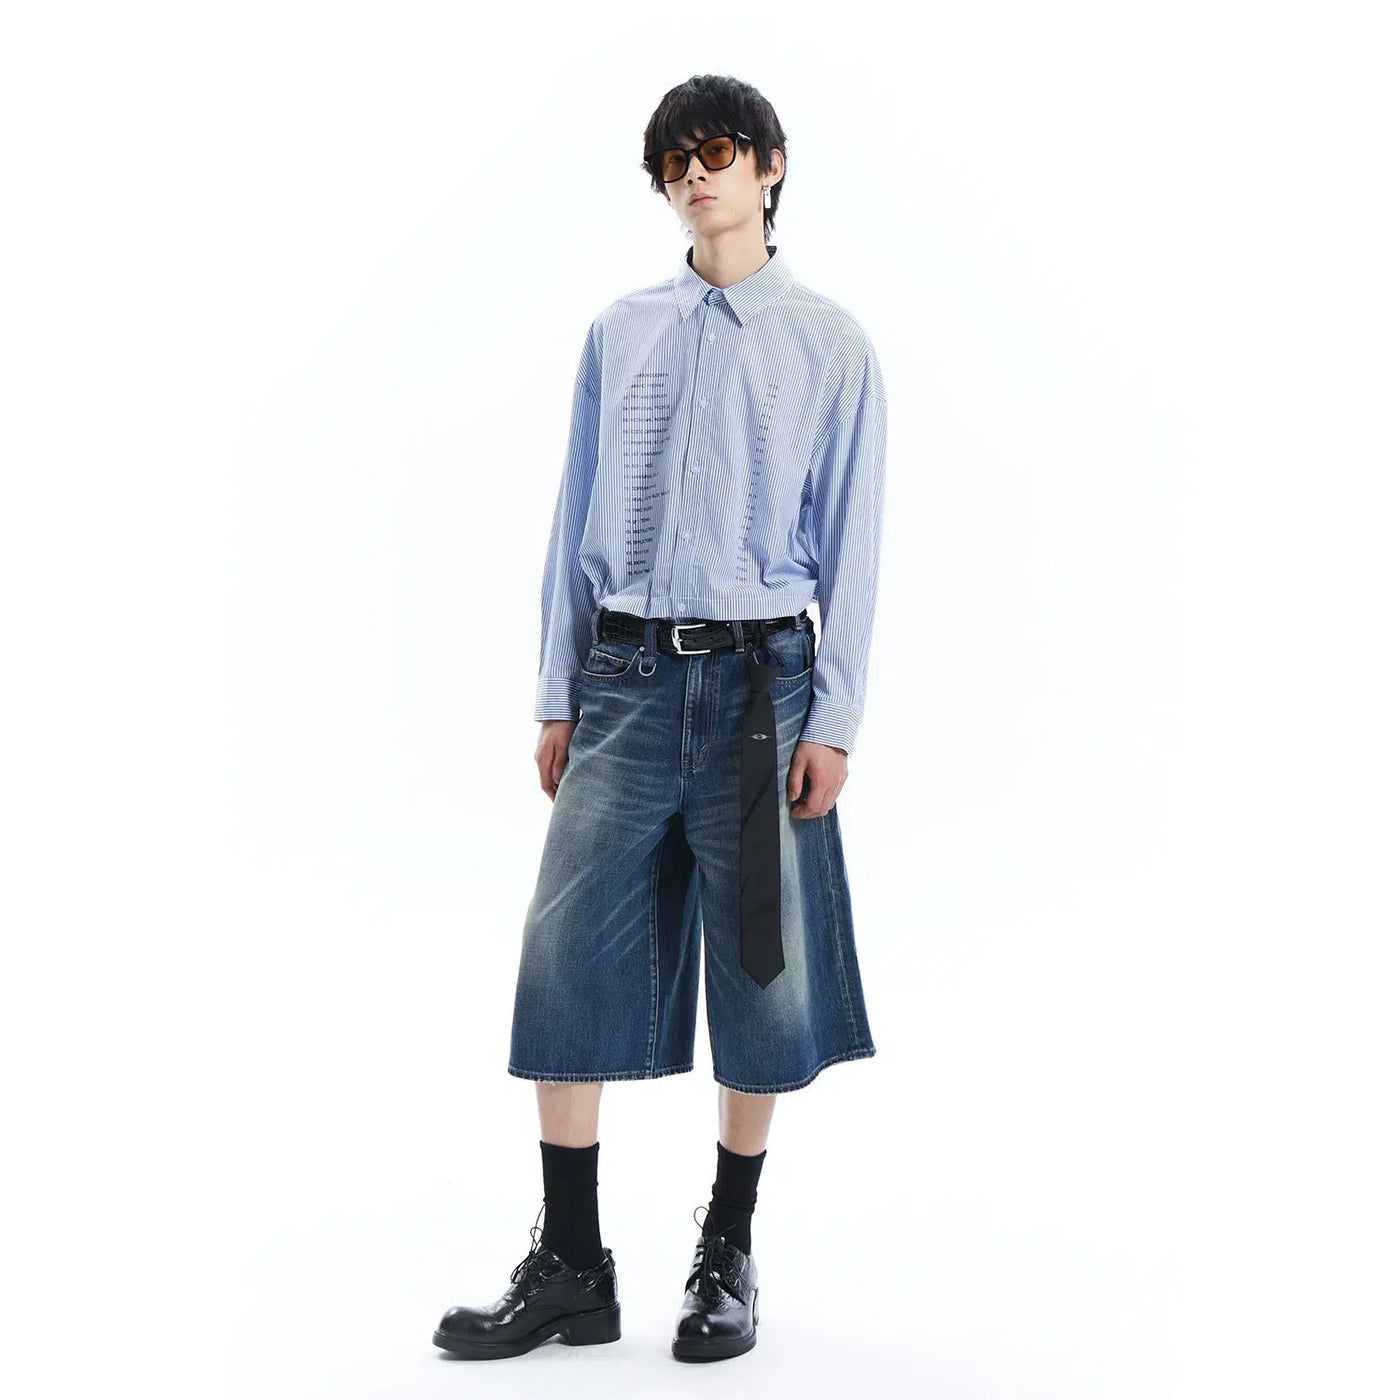 Terra Incognita Wide Leg Denim Long Shorts Korean Street Fashion Shorts By Terra Incognita Shop Online at OH Vault